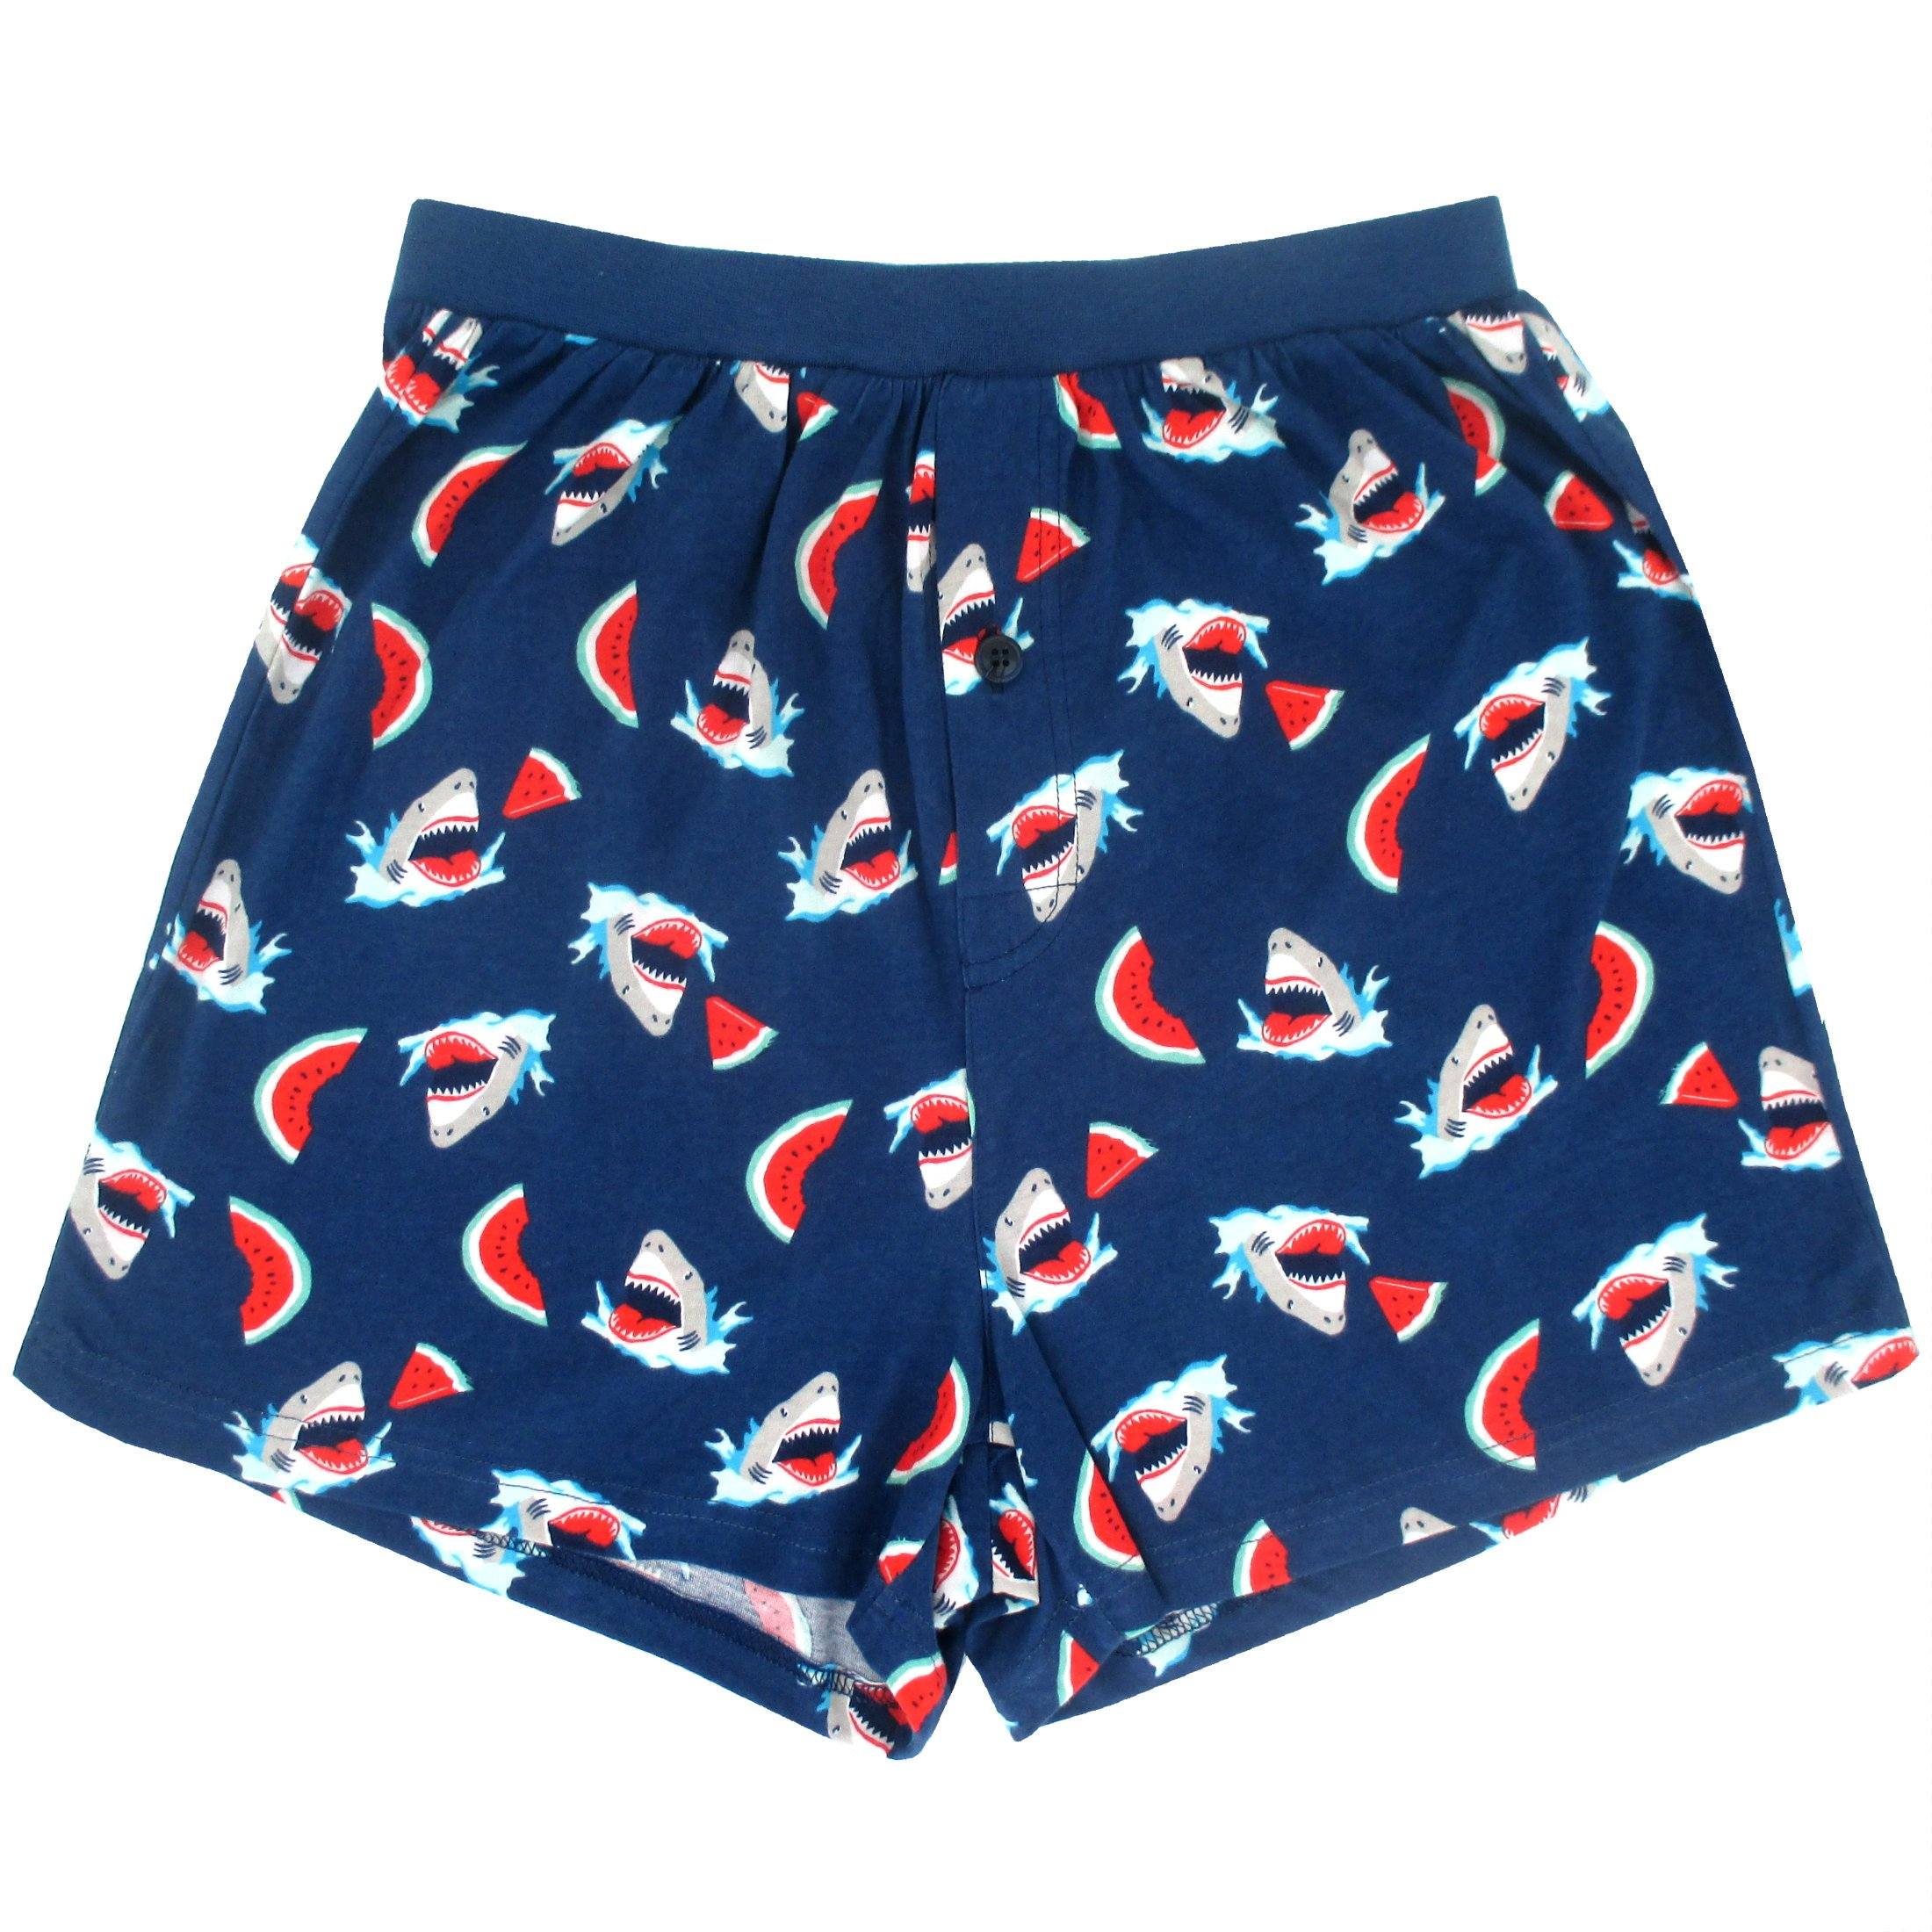 Men's Blue Shark Watermelon All Over Print Cotton Knit Boxer Shorts